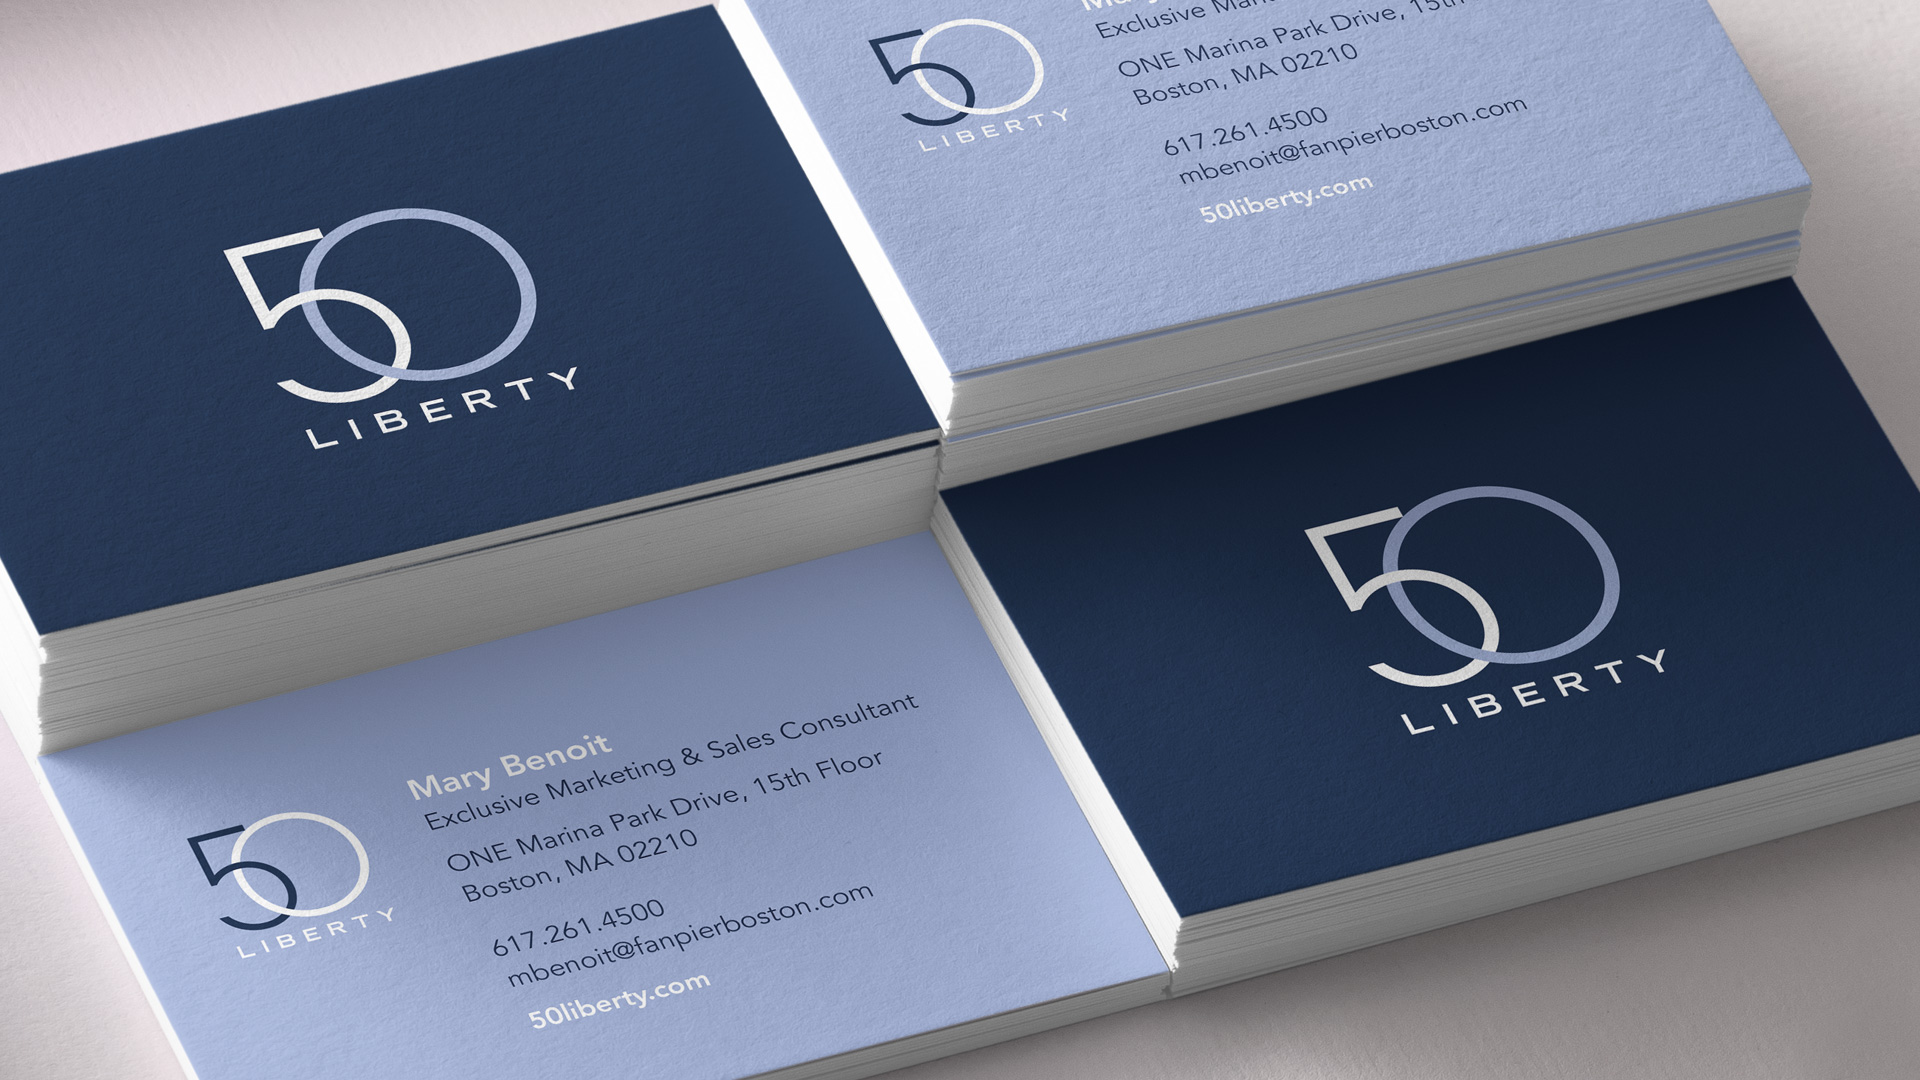 50 Liberty business cards